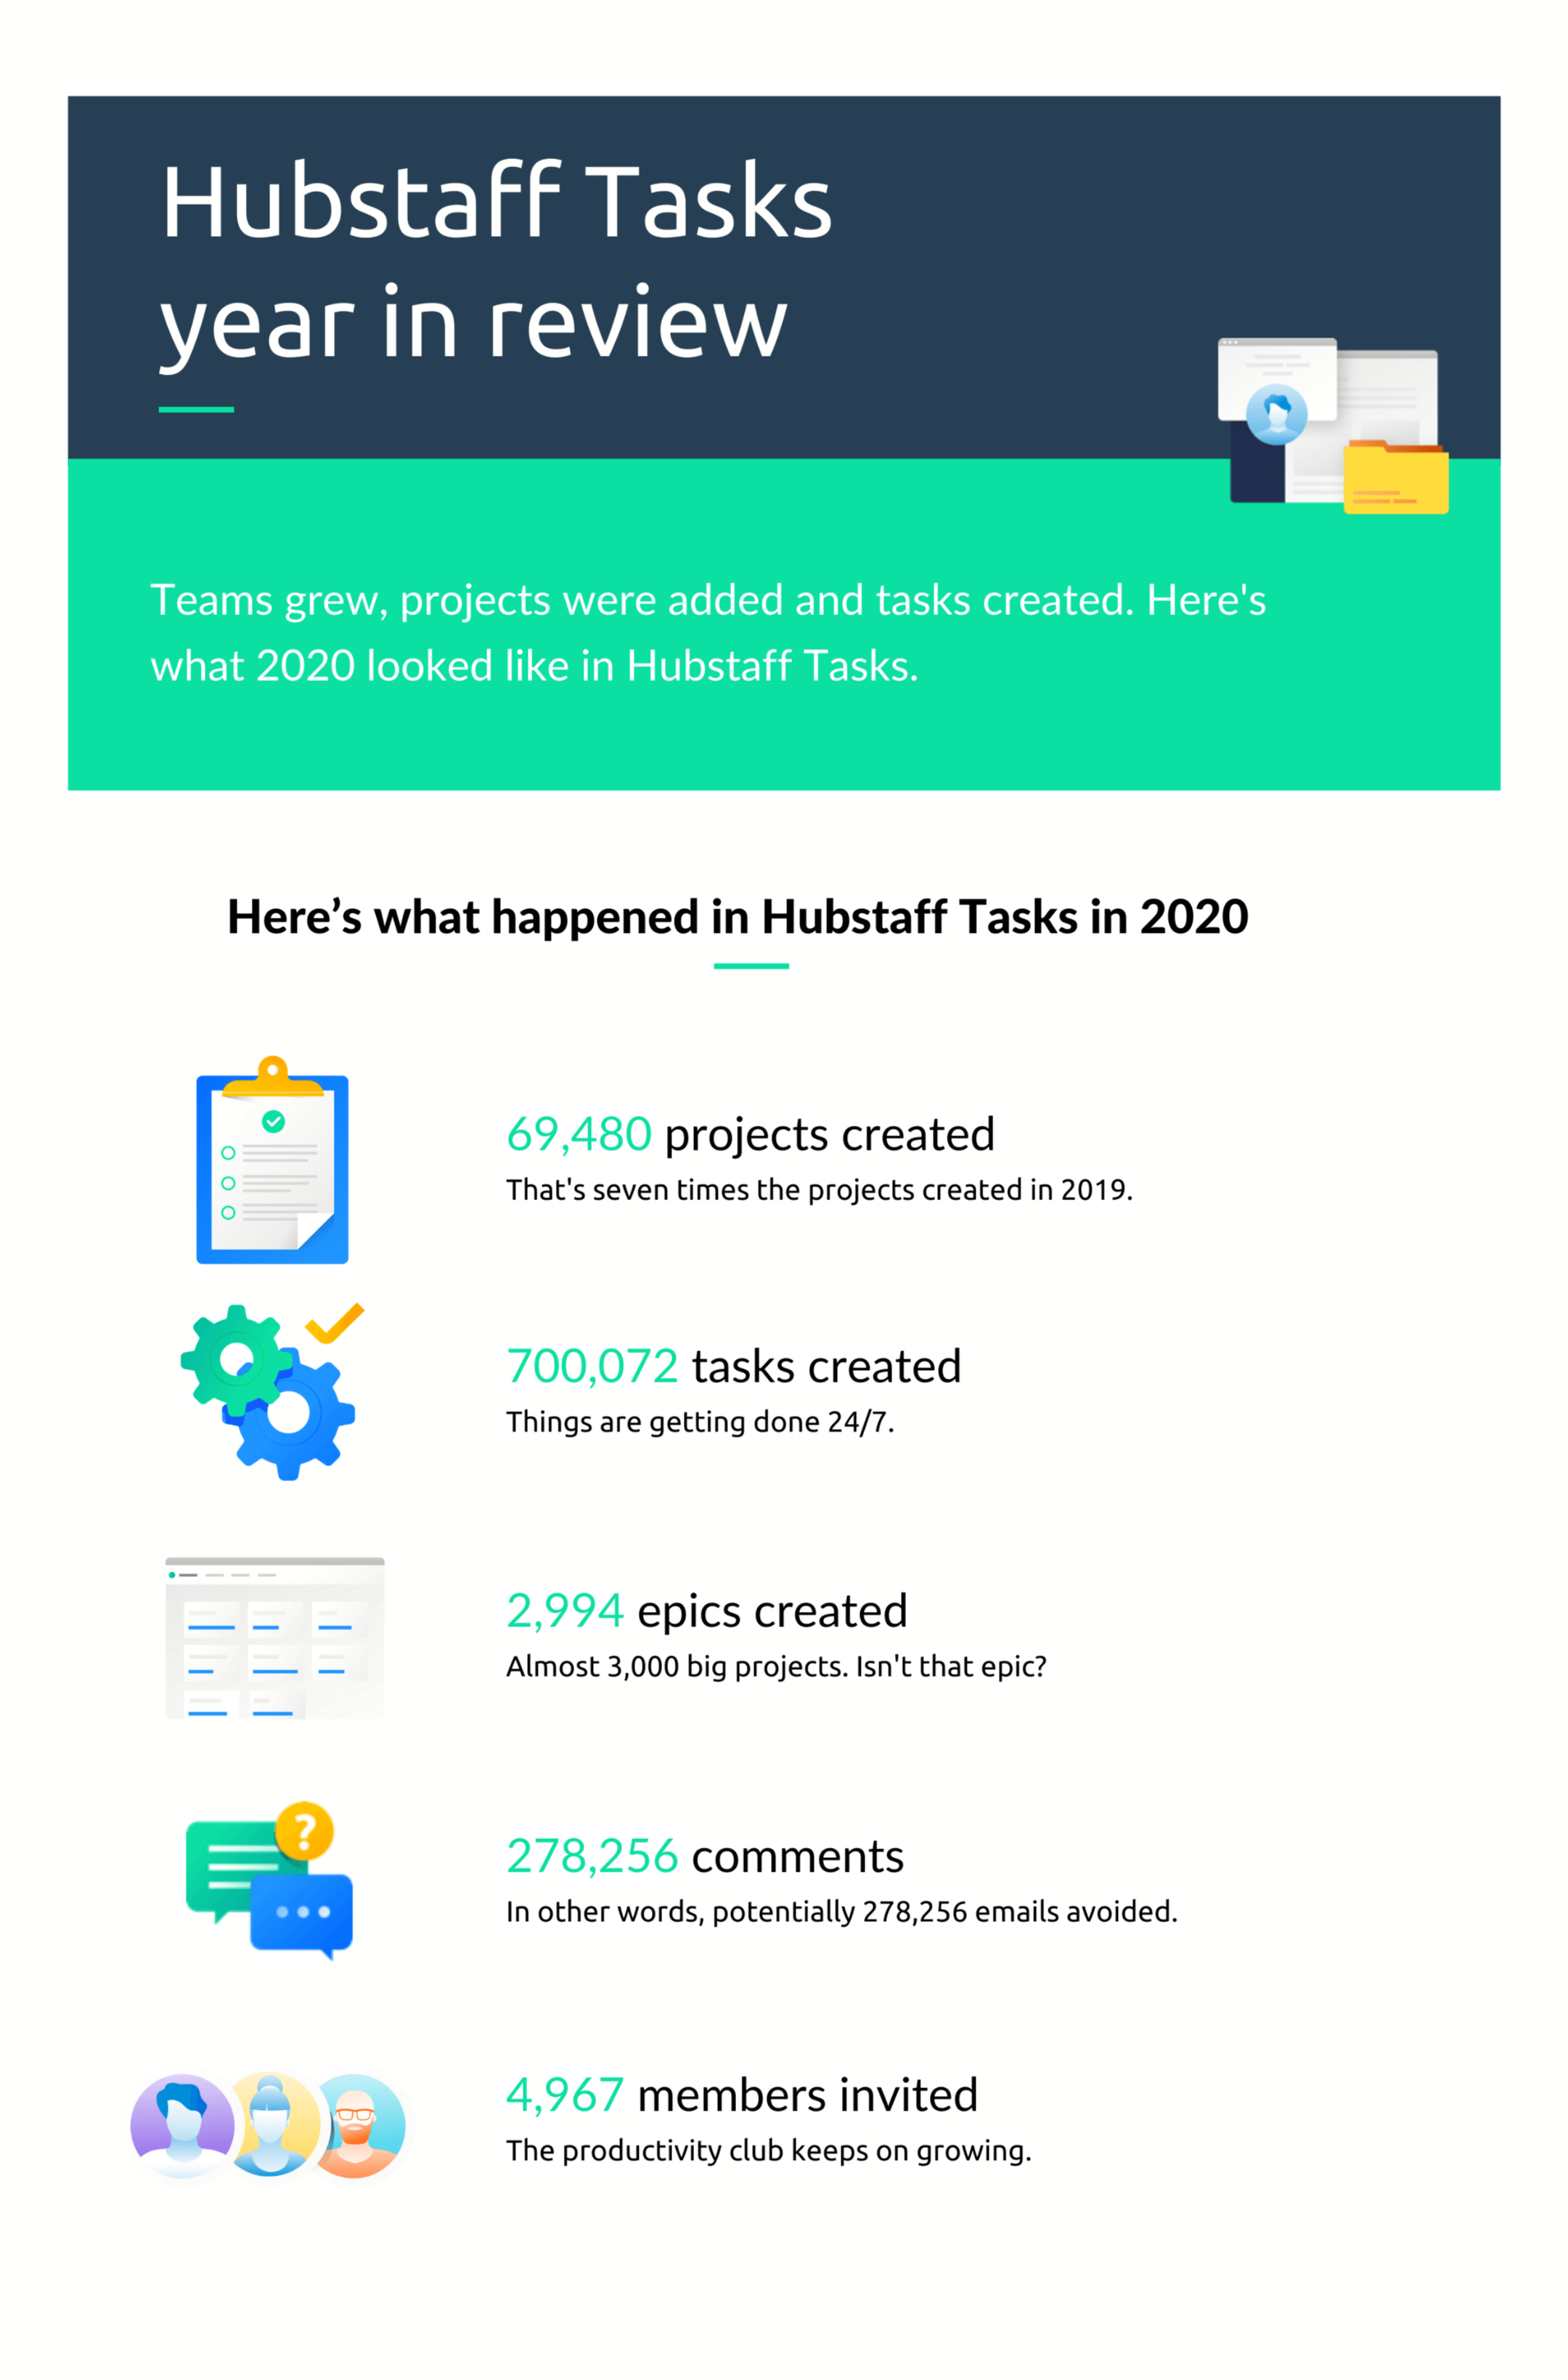 Hubstaff Tasks Year in Review 2020